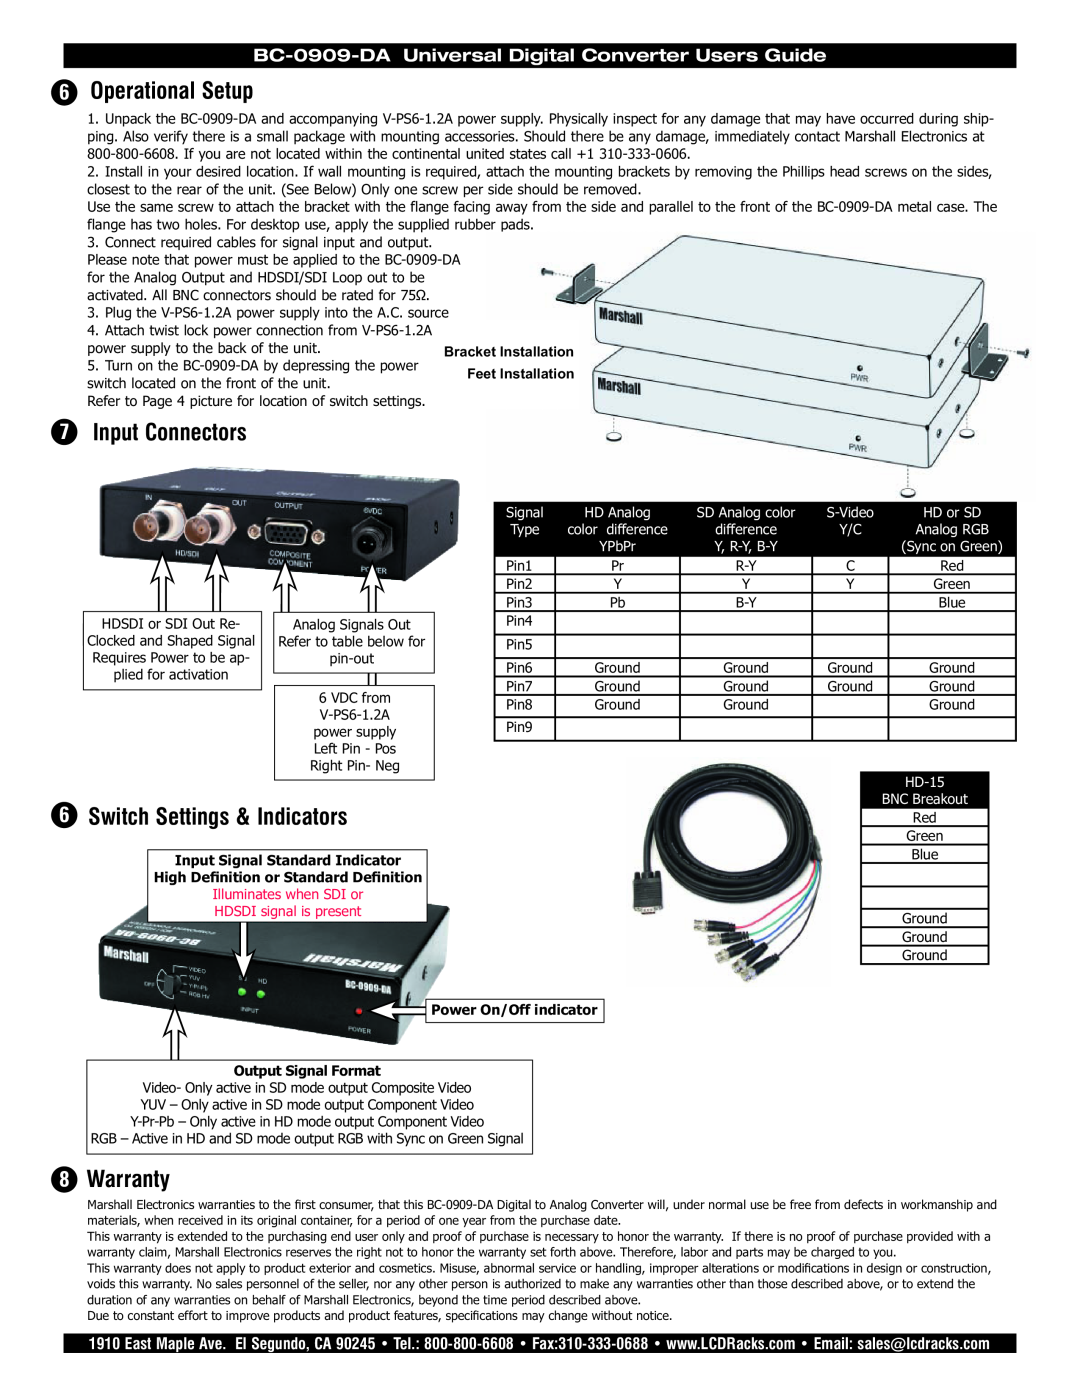 Marshall electronic BC-0909-DA Operational Setup, Input Connectors, Switch Settings & Indicators, Warranty, Signal, Type 